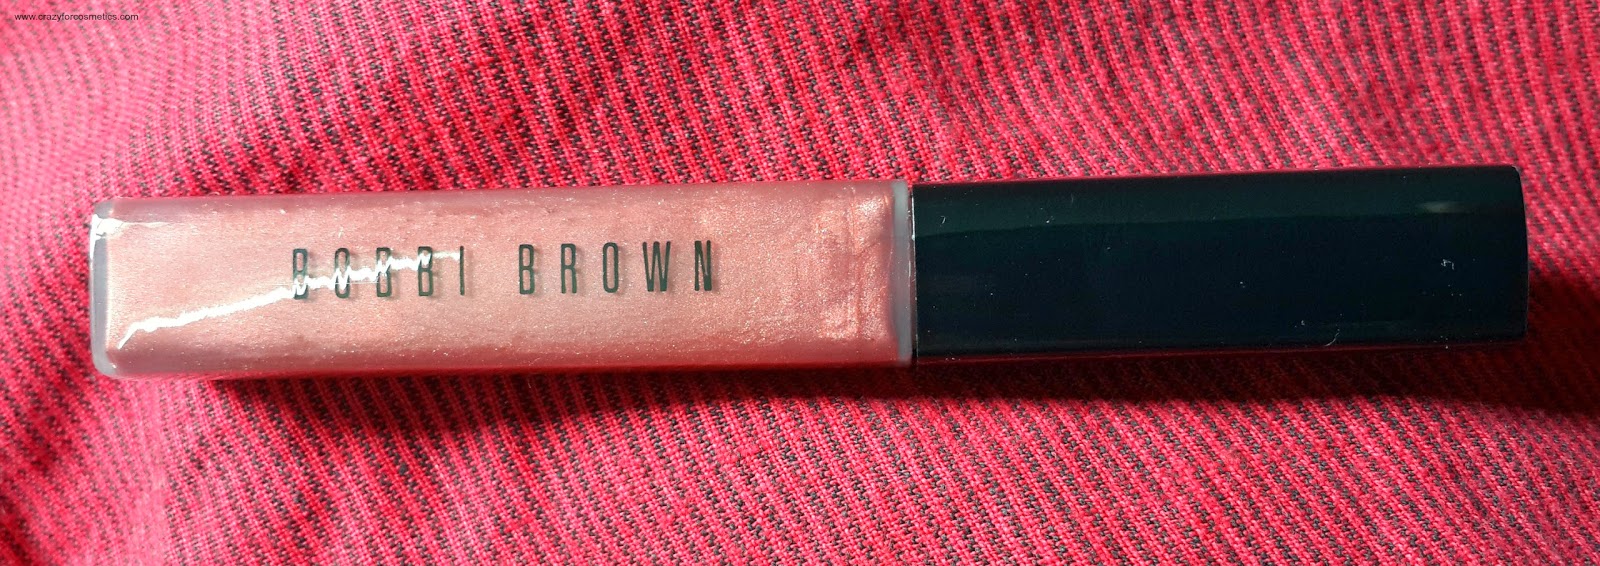 bobbi brown shimmer lip gloss Ruby Sugar review-bobbi brown shimmer lip gloss in India-bobbi brown in india